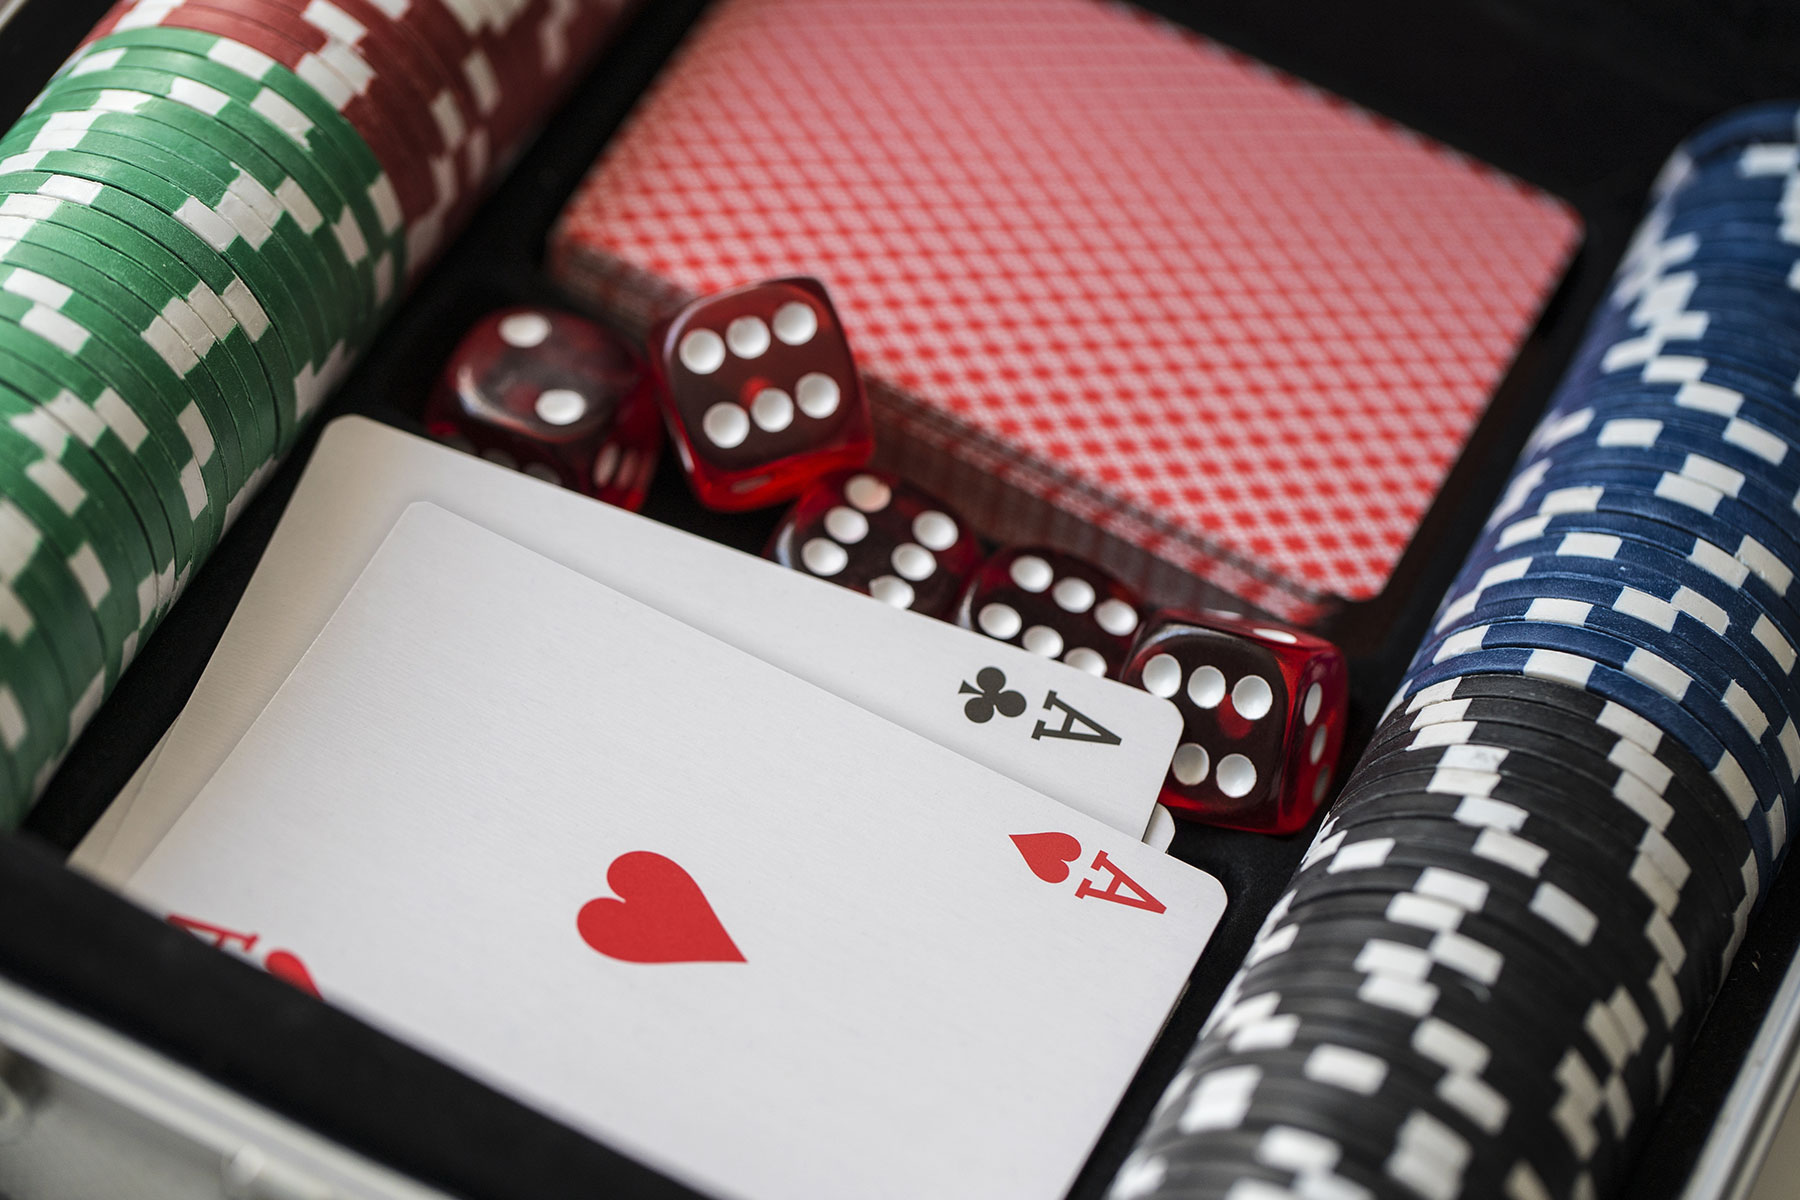 Tropicana Casino Table-Played Playing Cards Las Vegas Nevada